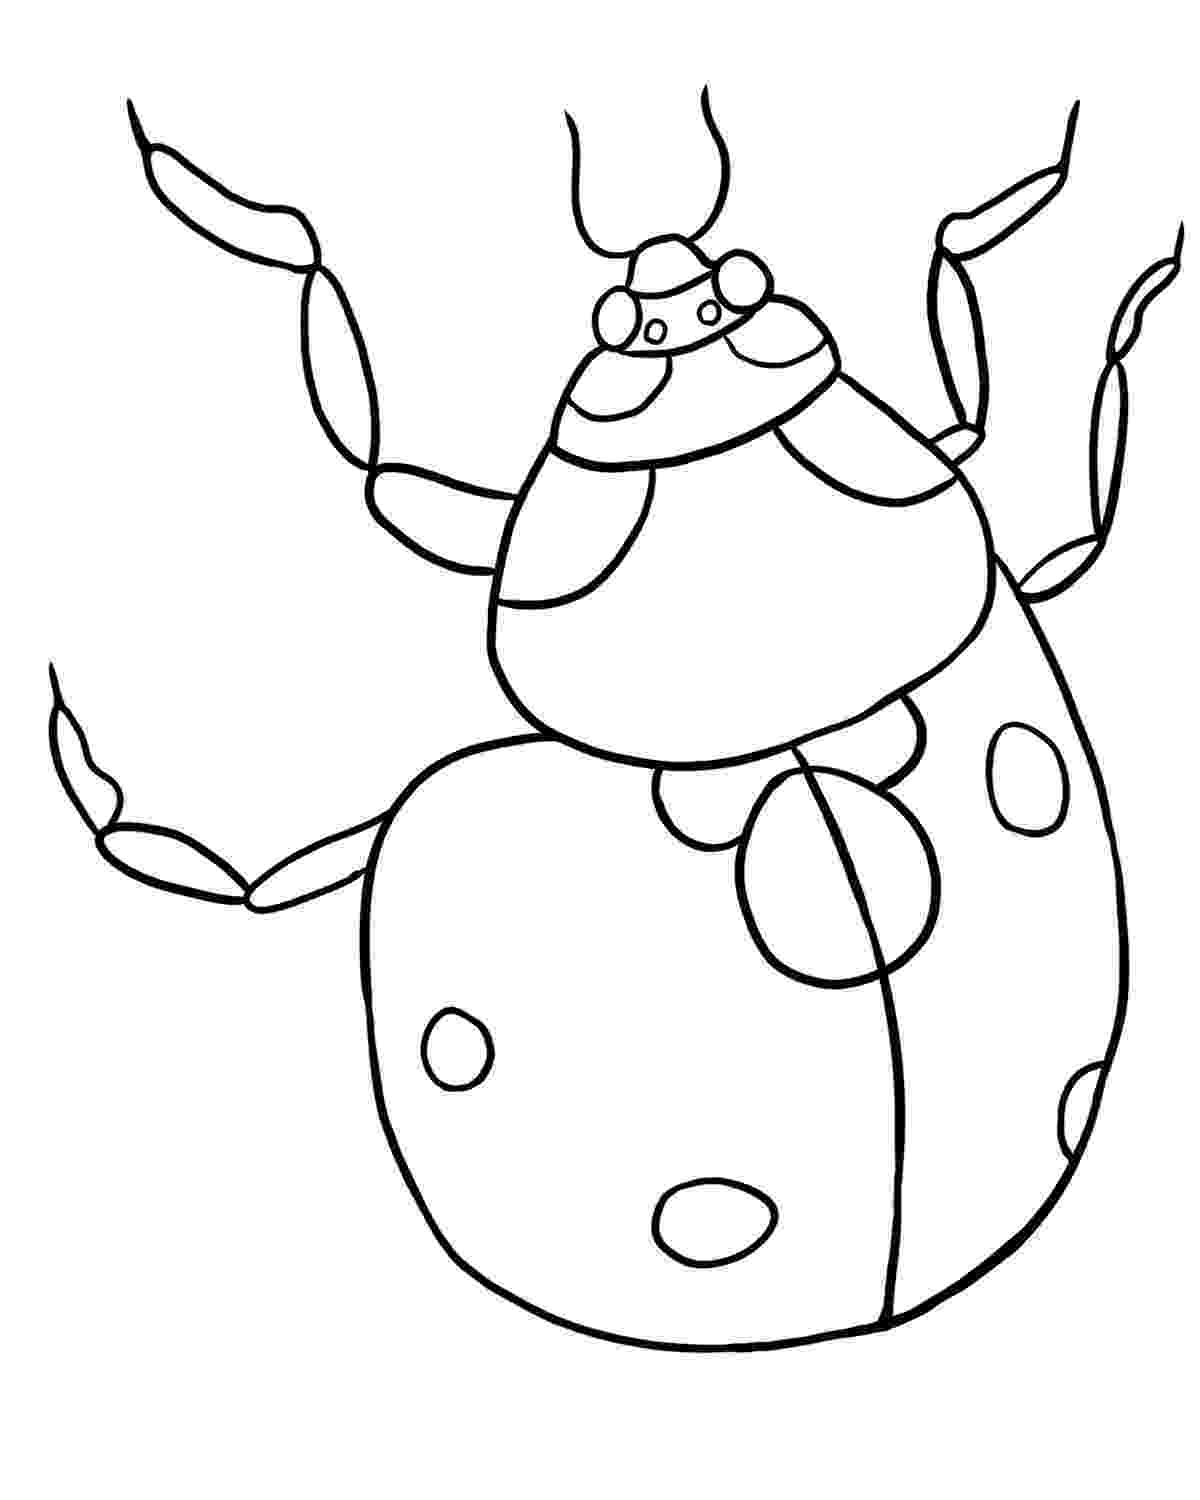 ladybug coloring sheet free printable ladybug coloring pages for kids cool2bkids ladybug coloring sheet 